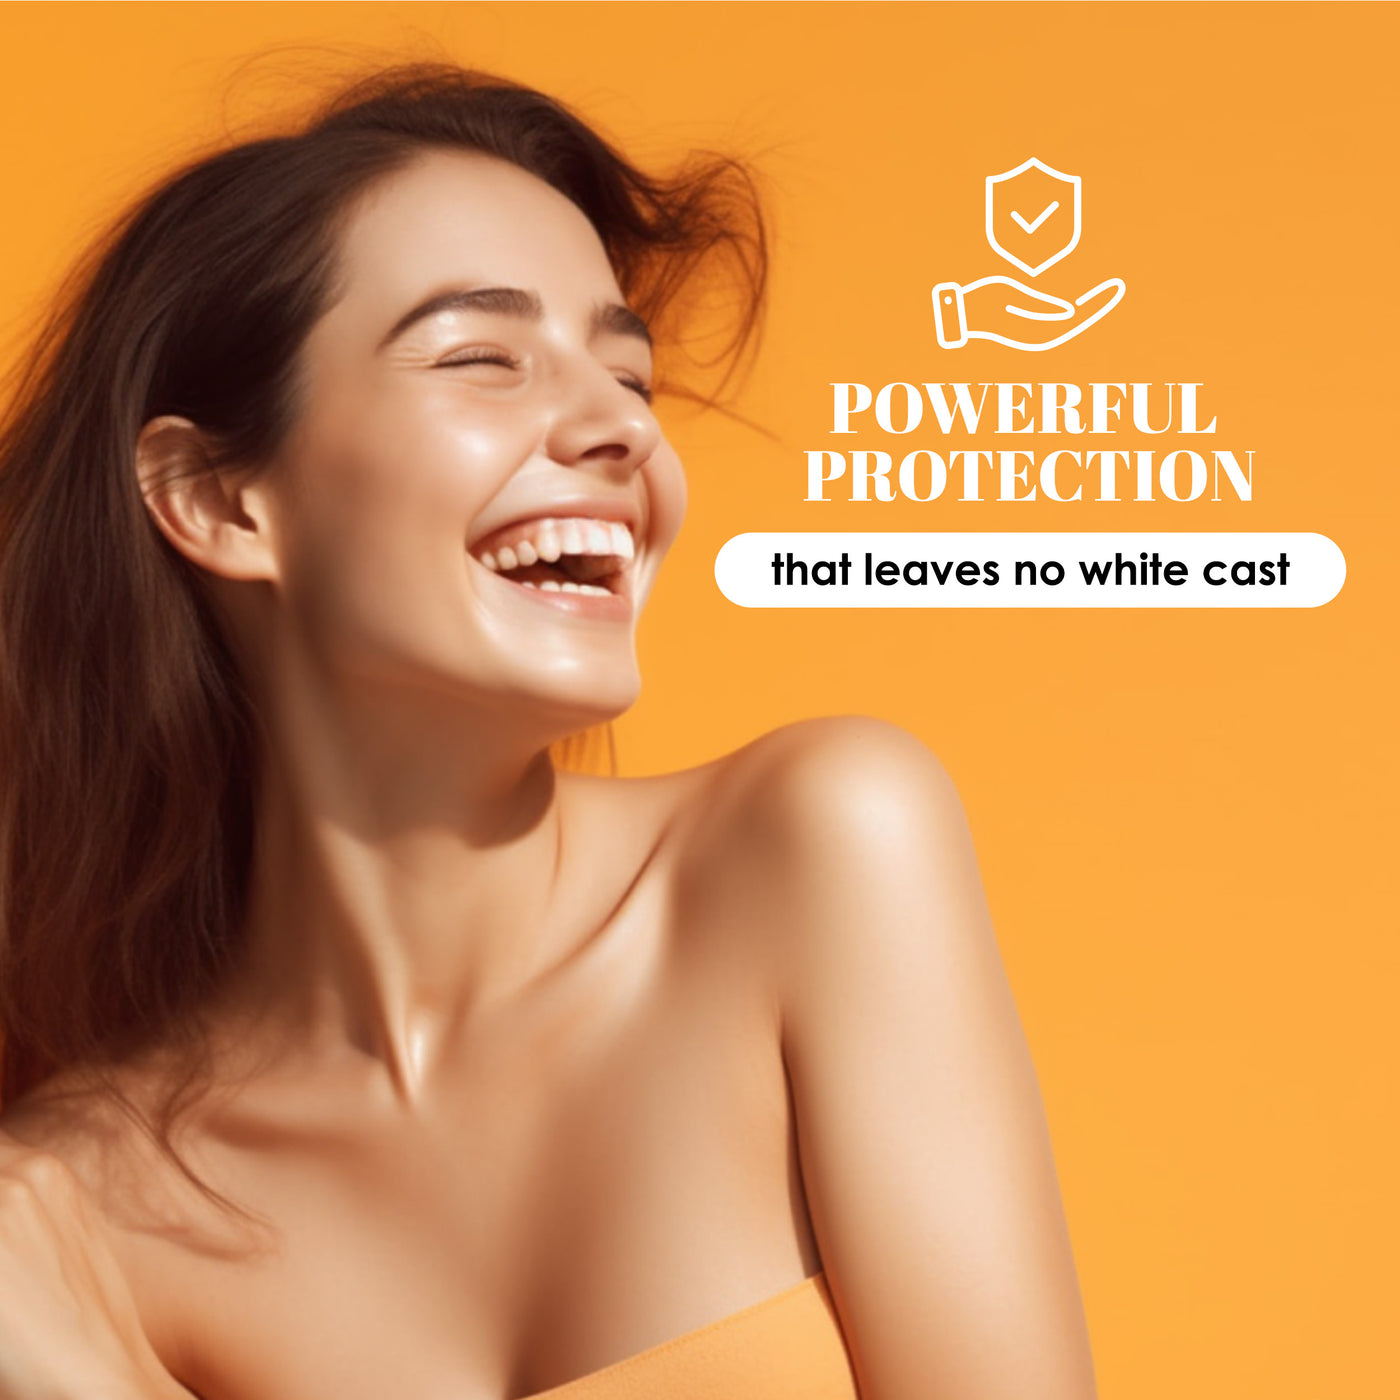 AquaLight Sunscreen SPF 50+ (50g) with Vitamin E and Vitamin B3 - Niacinamide